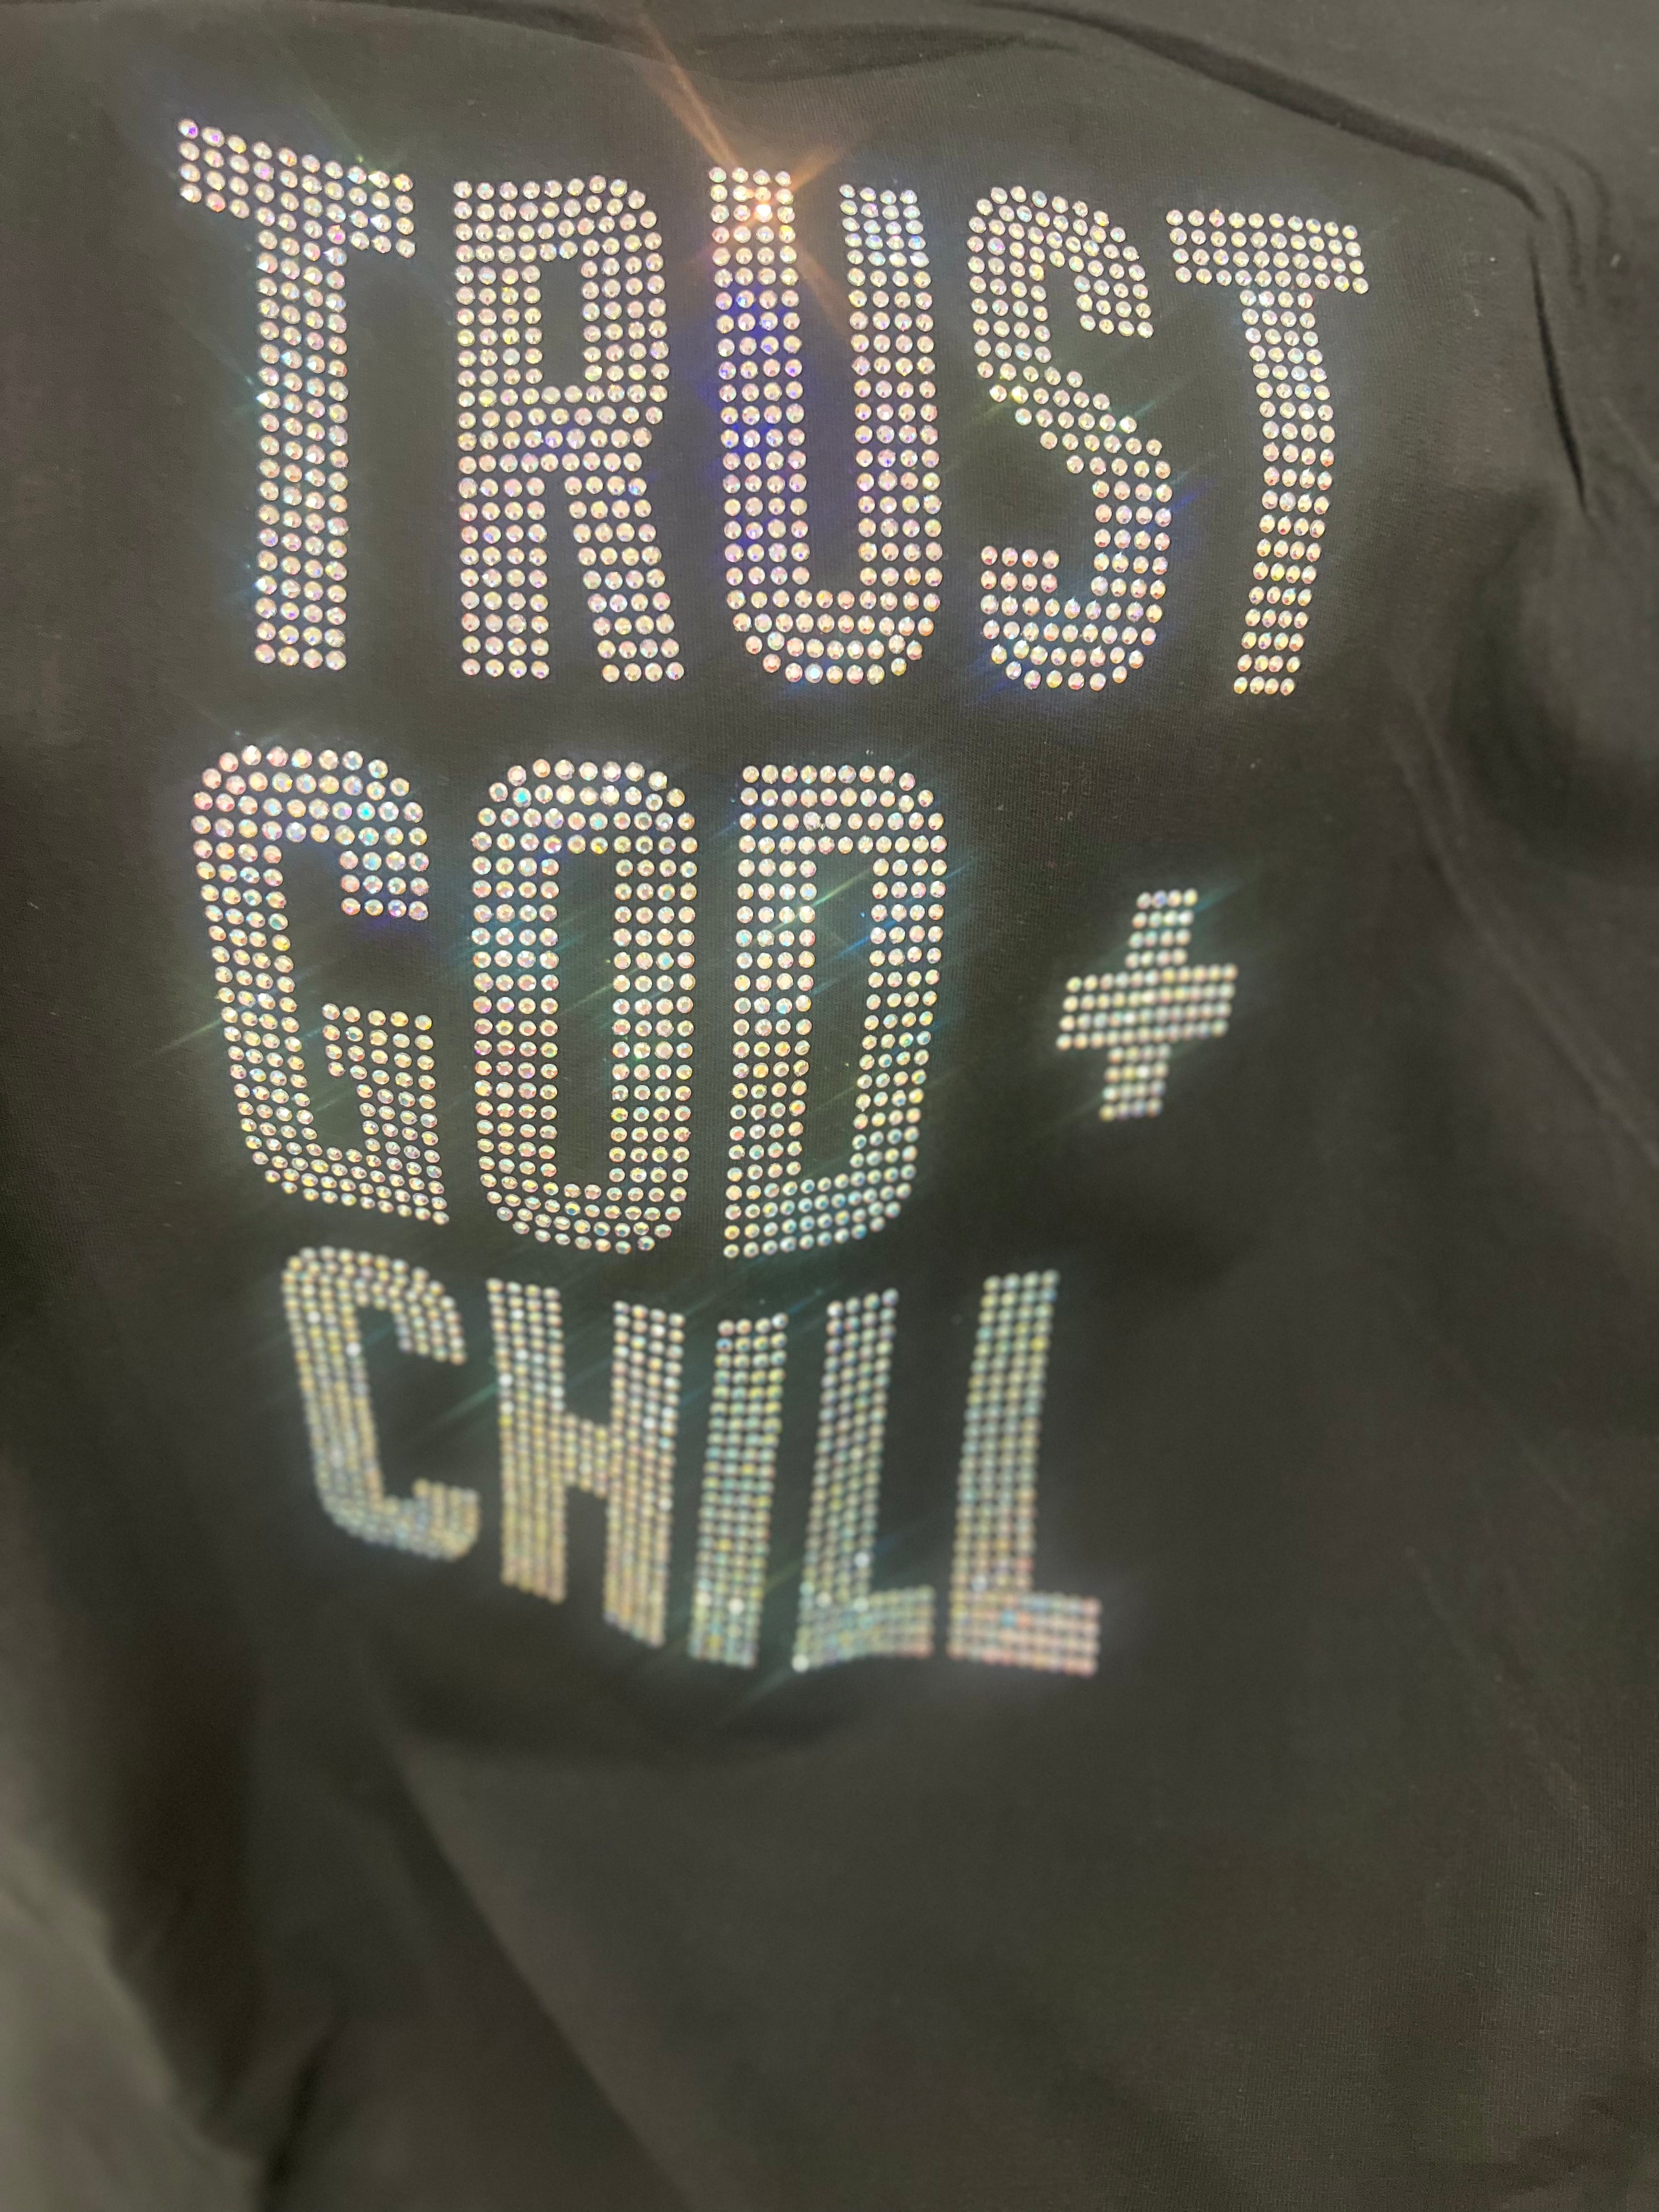 Trust God & Chill!